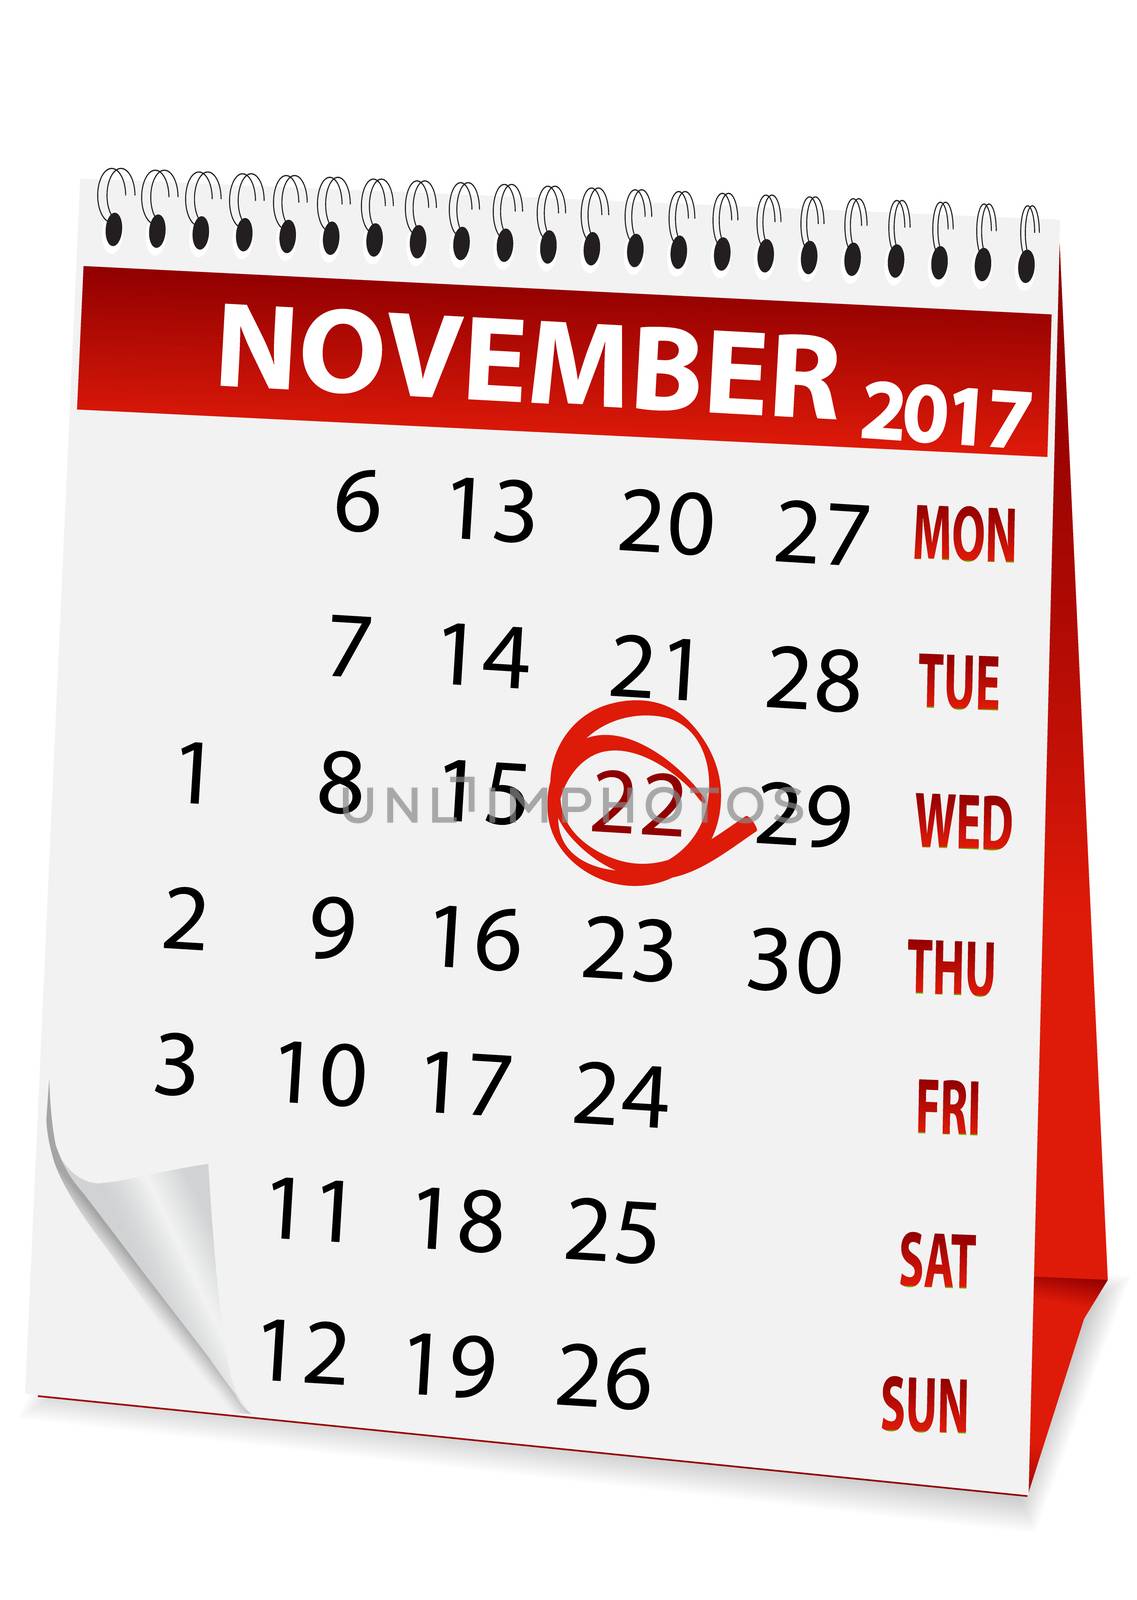 holiday calendar for Thanksgiving Day 2017 by rodakm